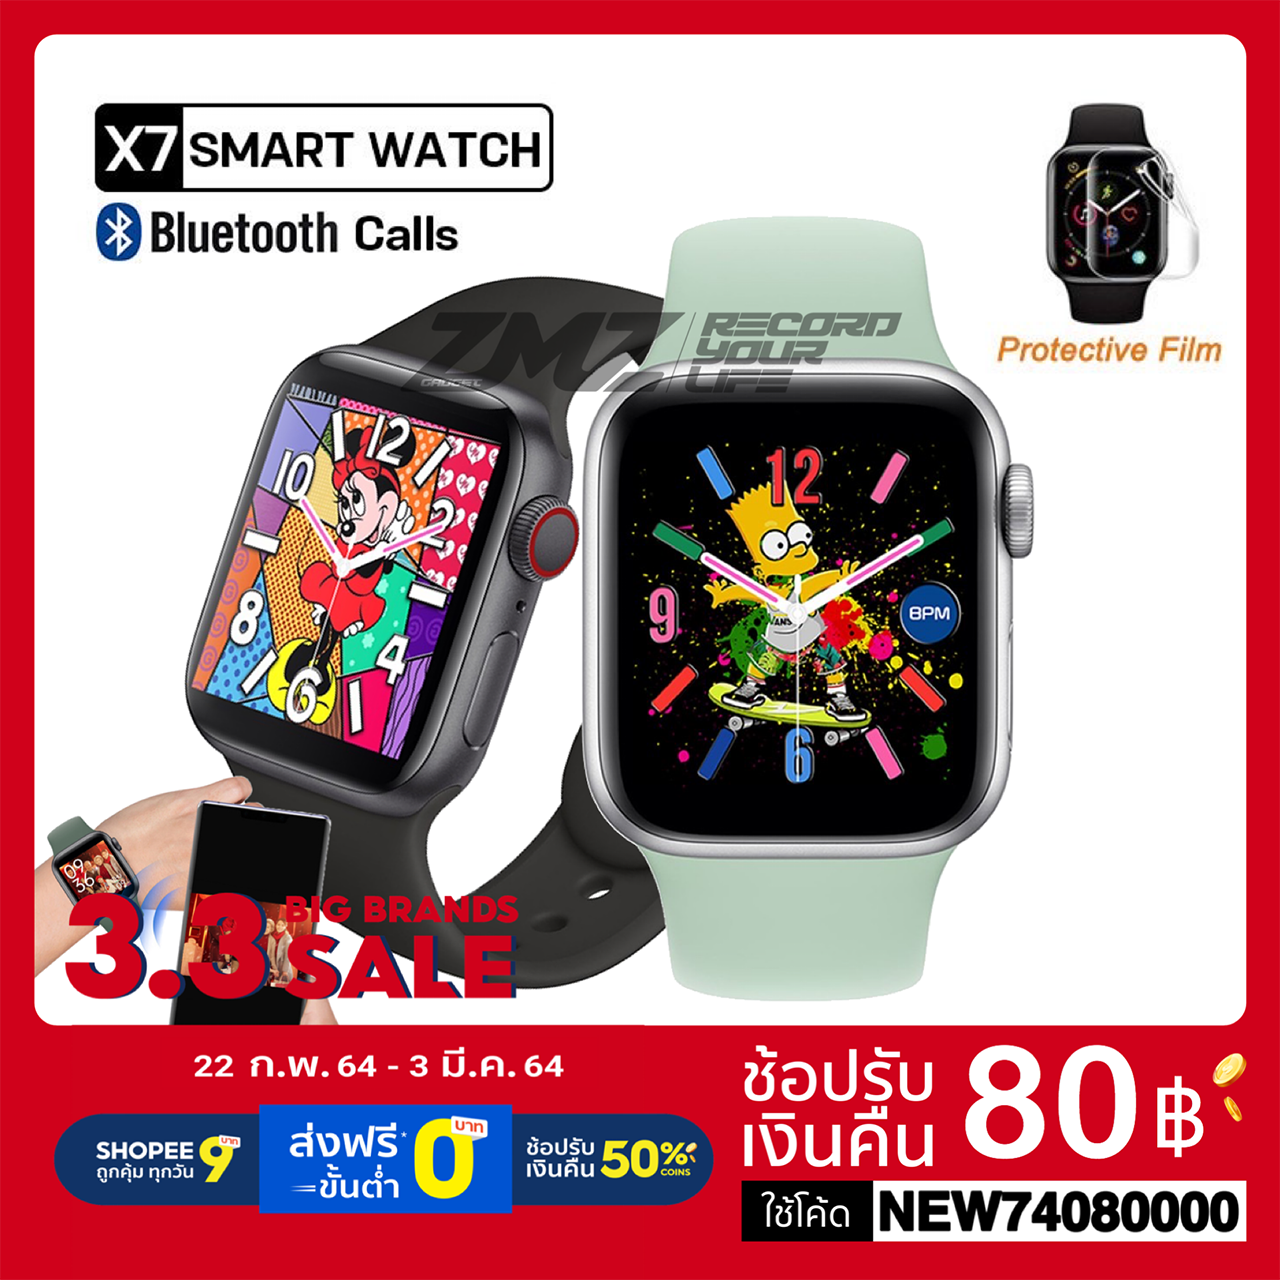 Best seller [ใส่โค้ด WG40APR ลดเพิ่ม 40.-] Smart Watch X7 pro max นาฬิกาอัจฉริยะ โทรออกรับสายได้ Series5 รองรับ Bluetooth นาฬิกาบอกเวลา นาฬิกาข้อมือผู้หญิง นาฬิกาข้อมือผู้ชาย นาฬิกาข้อมือเด็ก นาฬิกาสวยหรู